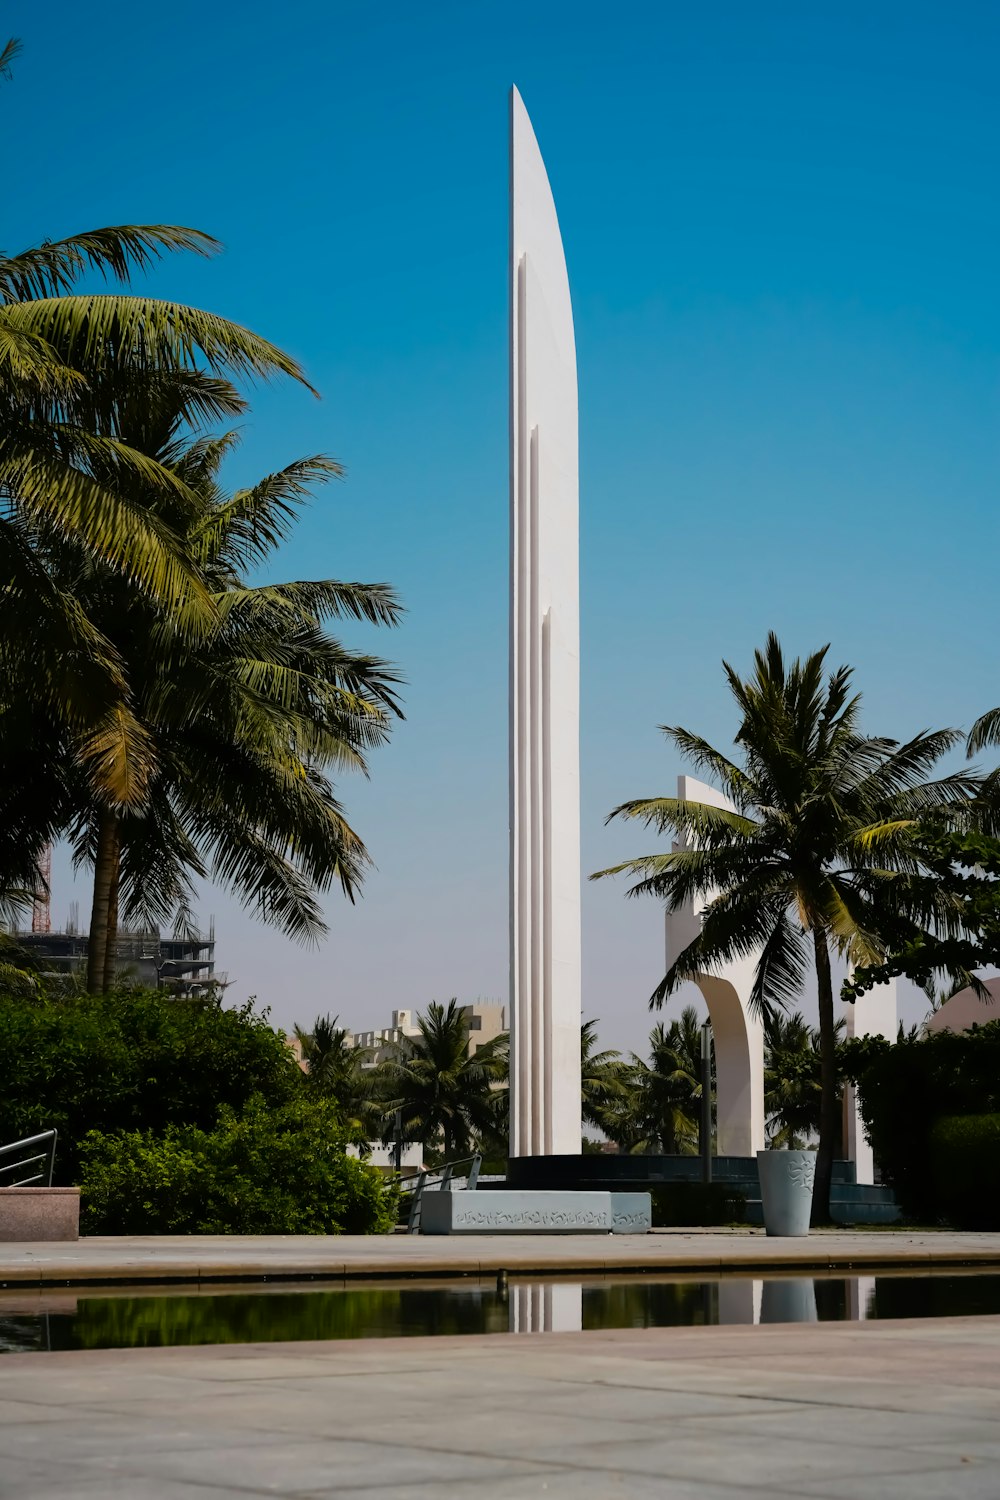 a tall white monument